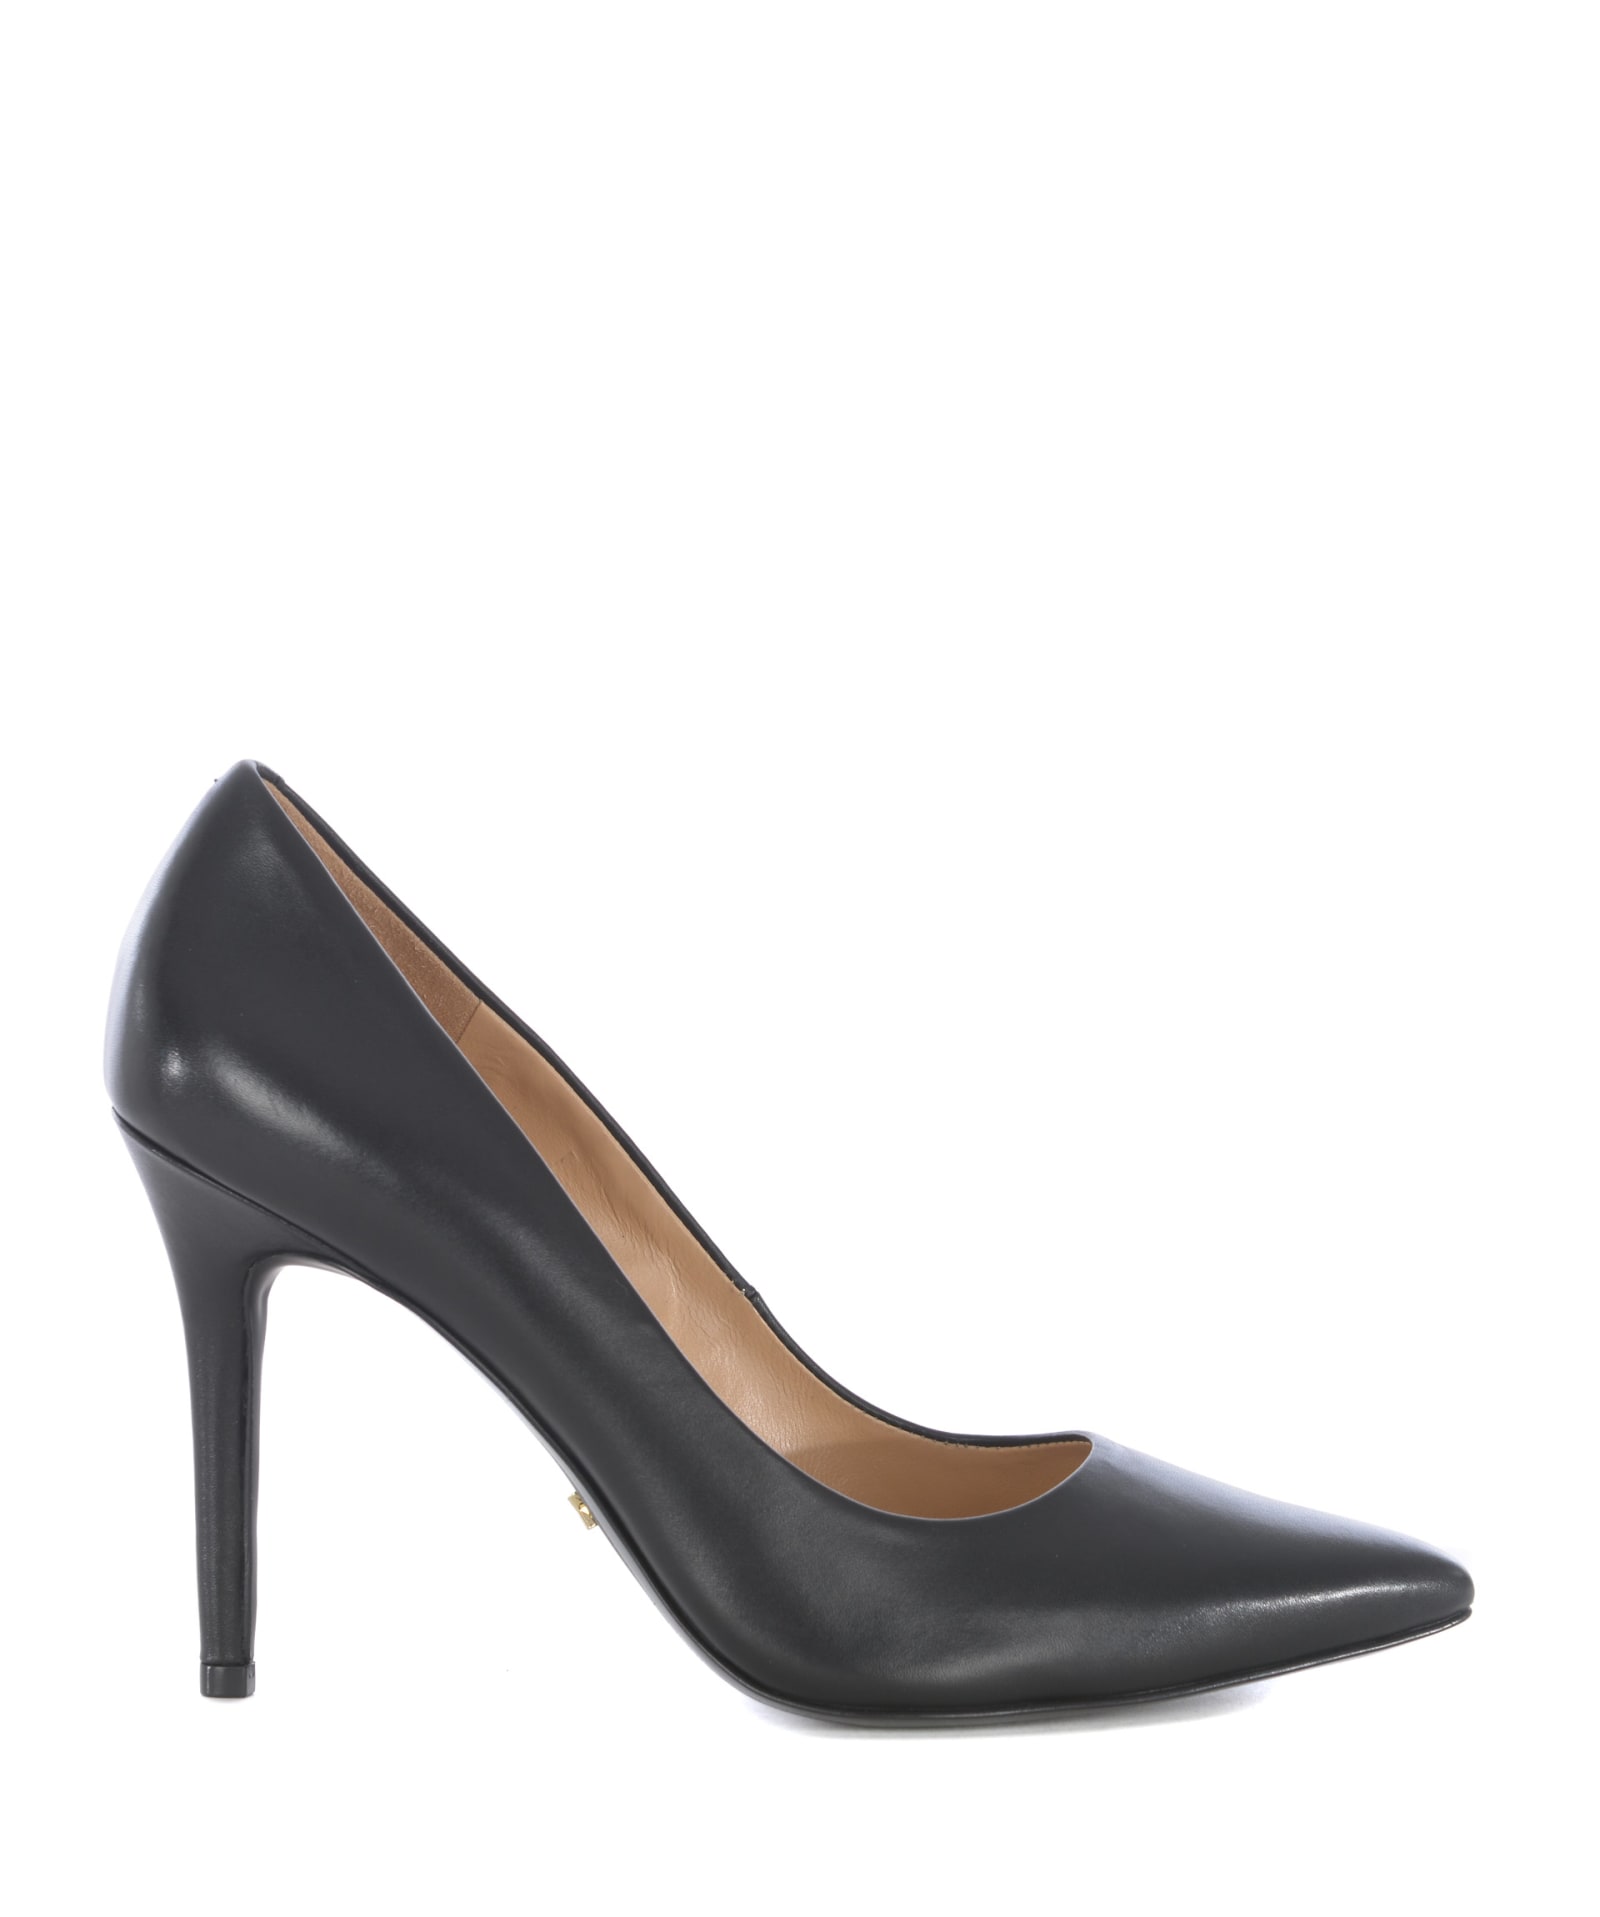 Michael Kors High-heeled shoe